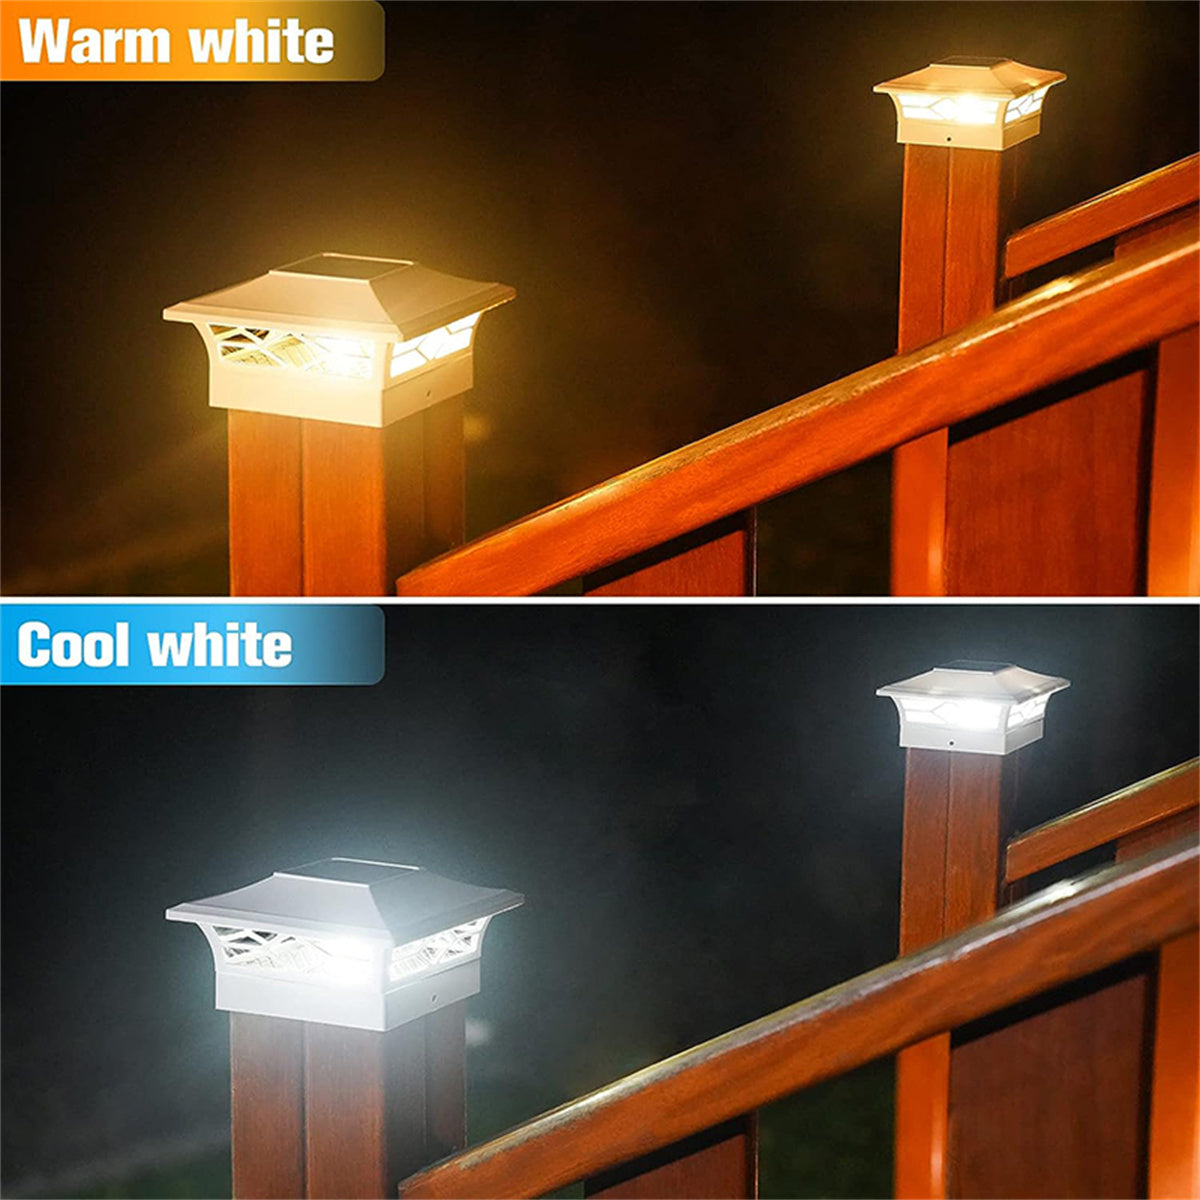 2 Pack Solar Post Cap Lights, 4''x4'' 6''x6'' Outdoor LED Fence Post Cap Lights, 2 Color Modes Solar Powered Deck Lights for Dock Waterproof, fit for Wooden/Vinyl Posts